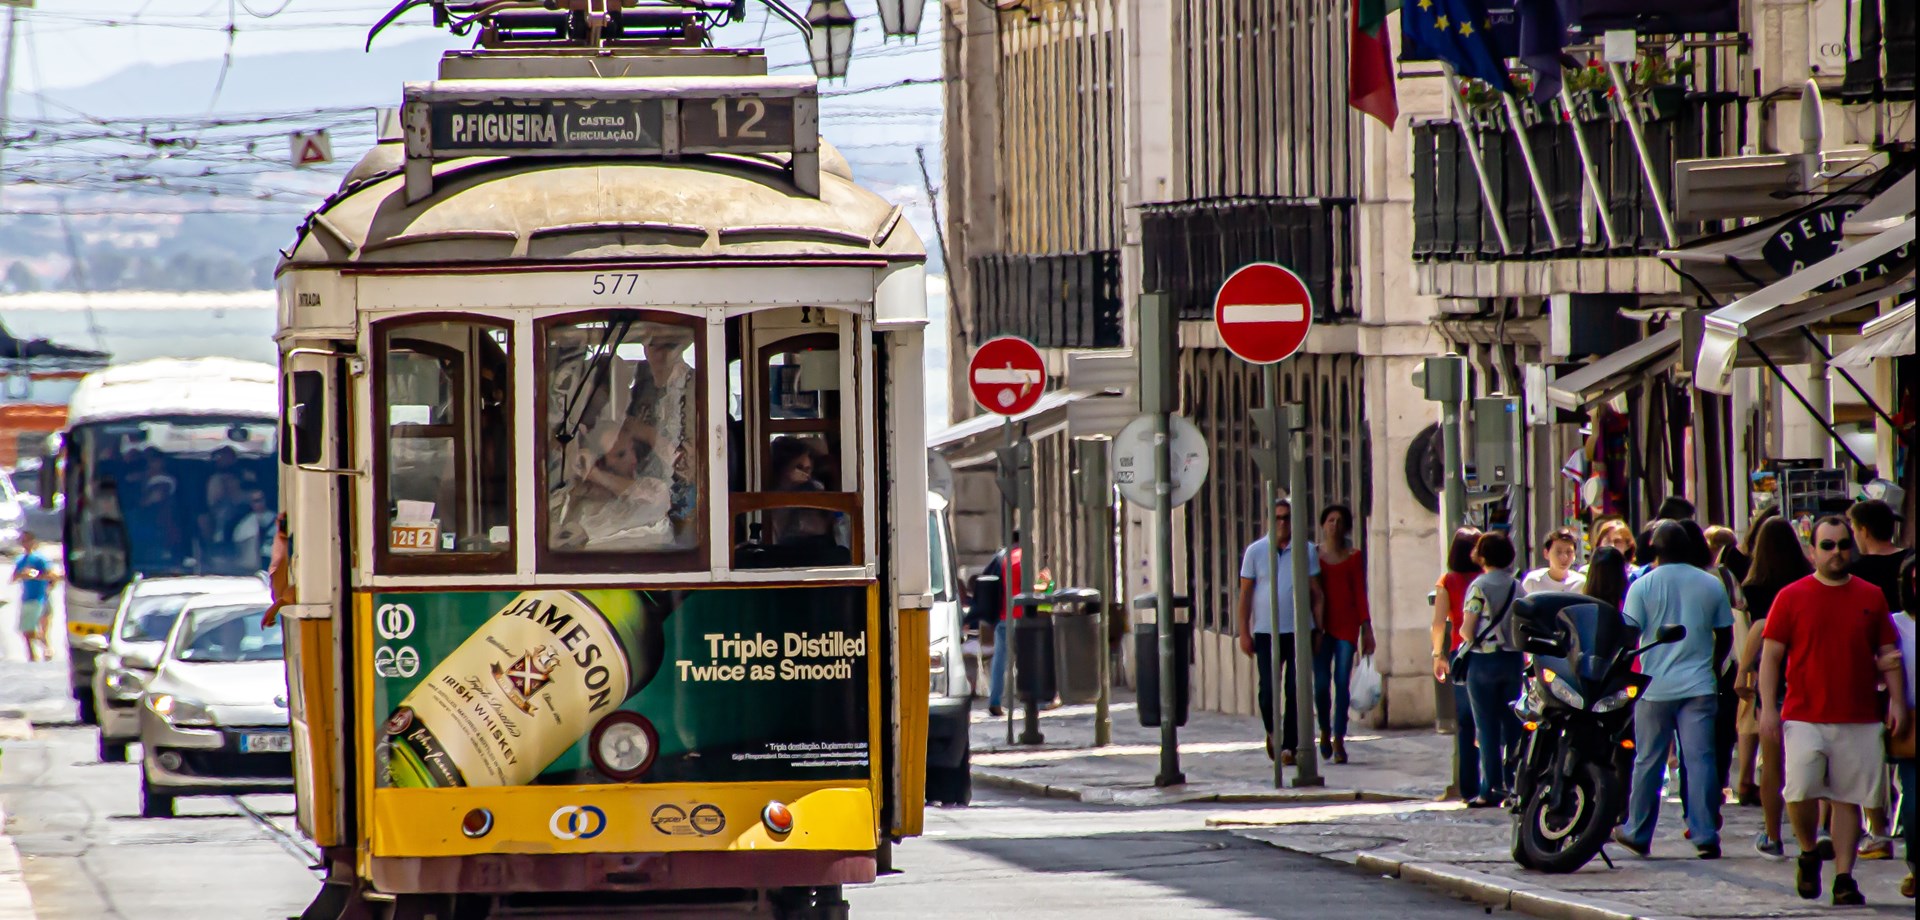 Explore Lisboa a bordo do mítico Elétrico 28